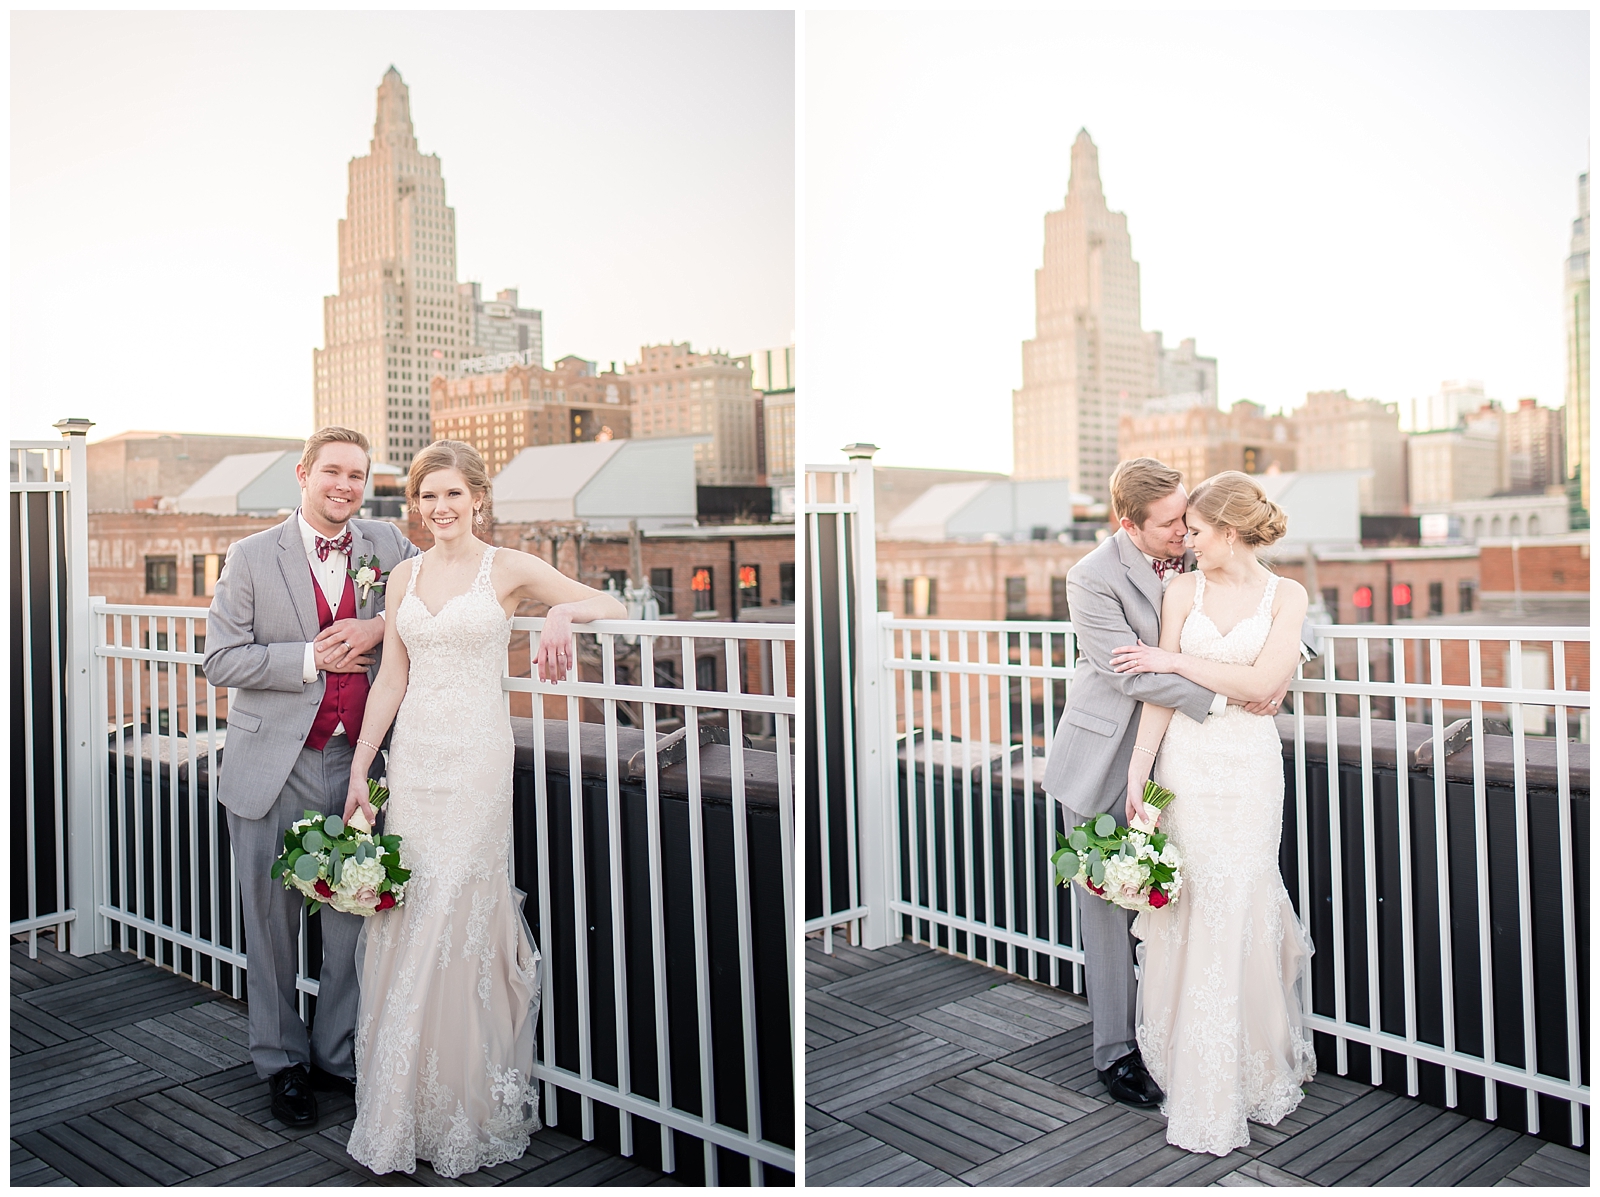 Wedding photography at Terrace on Grand by Kansas City wedding photographers Wisdom-Watson Weddings.